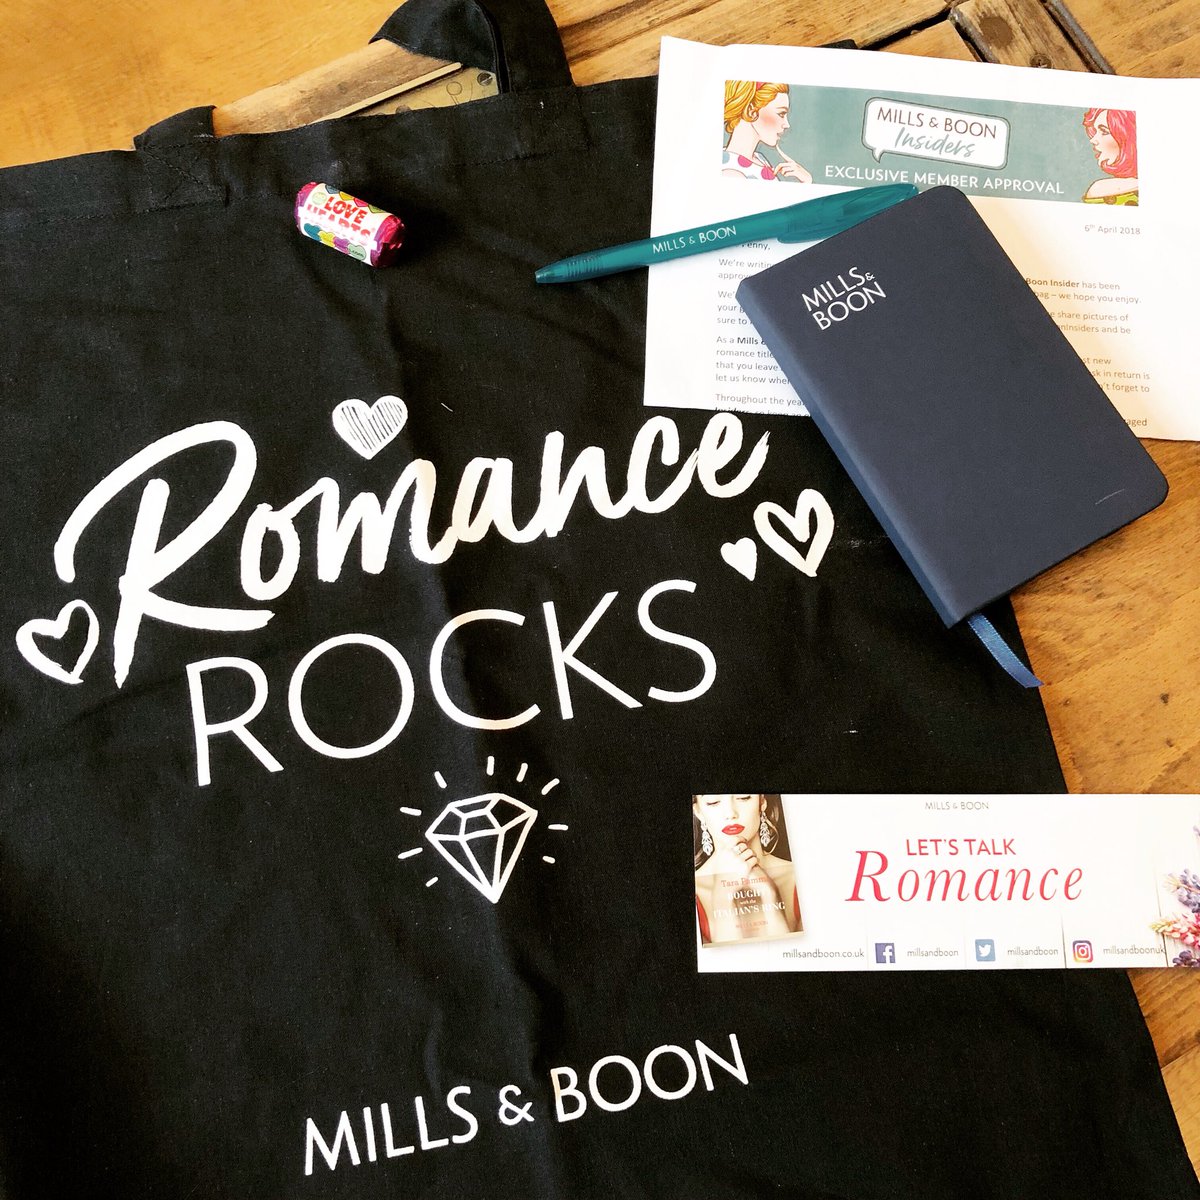 Ooh I love this goody bag!! 💕 
Was a fab surprise this morning! Thanks @millsandboonuk 
#millsandbooninsiders #millsandbooninsider #millsandboon #goodybag #romancerocks